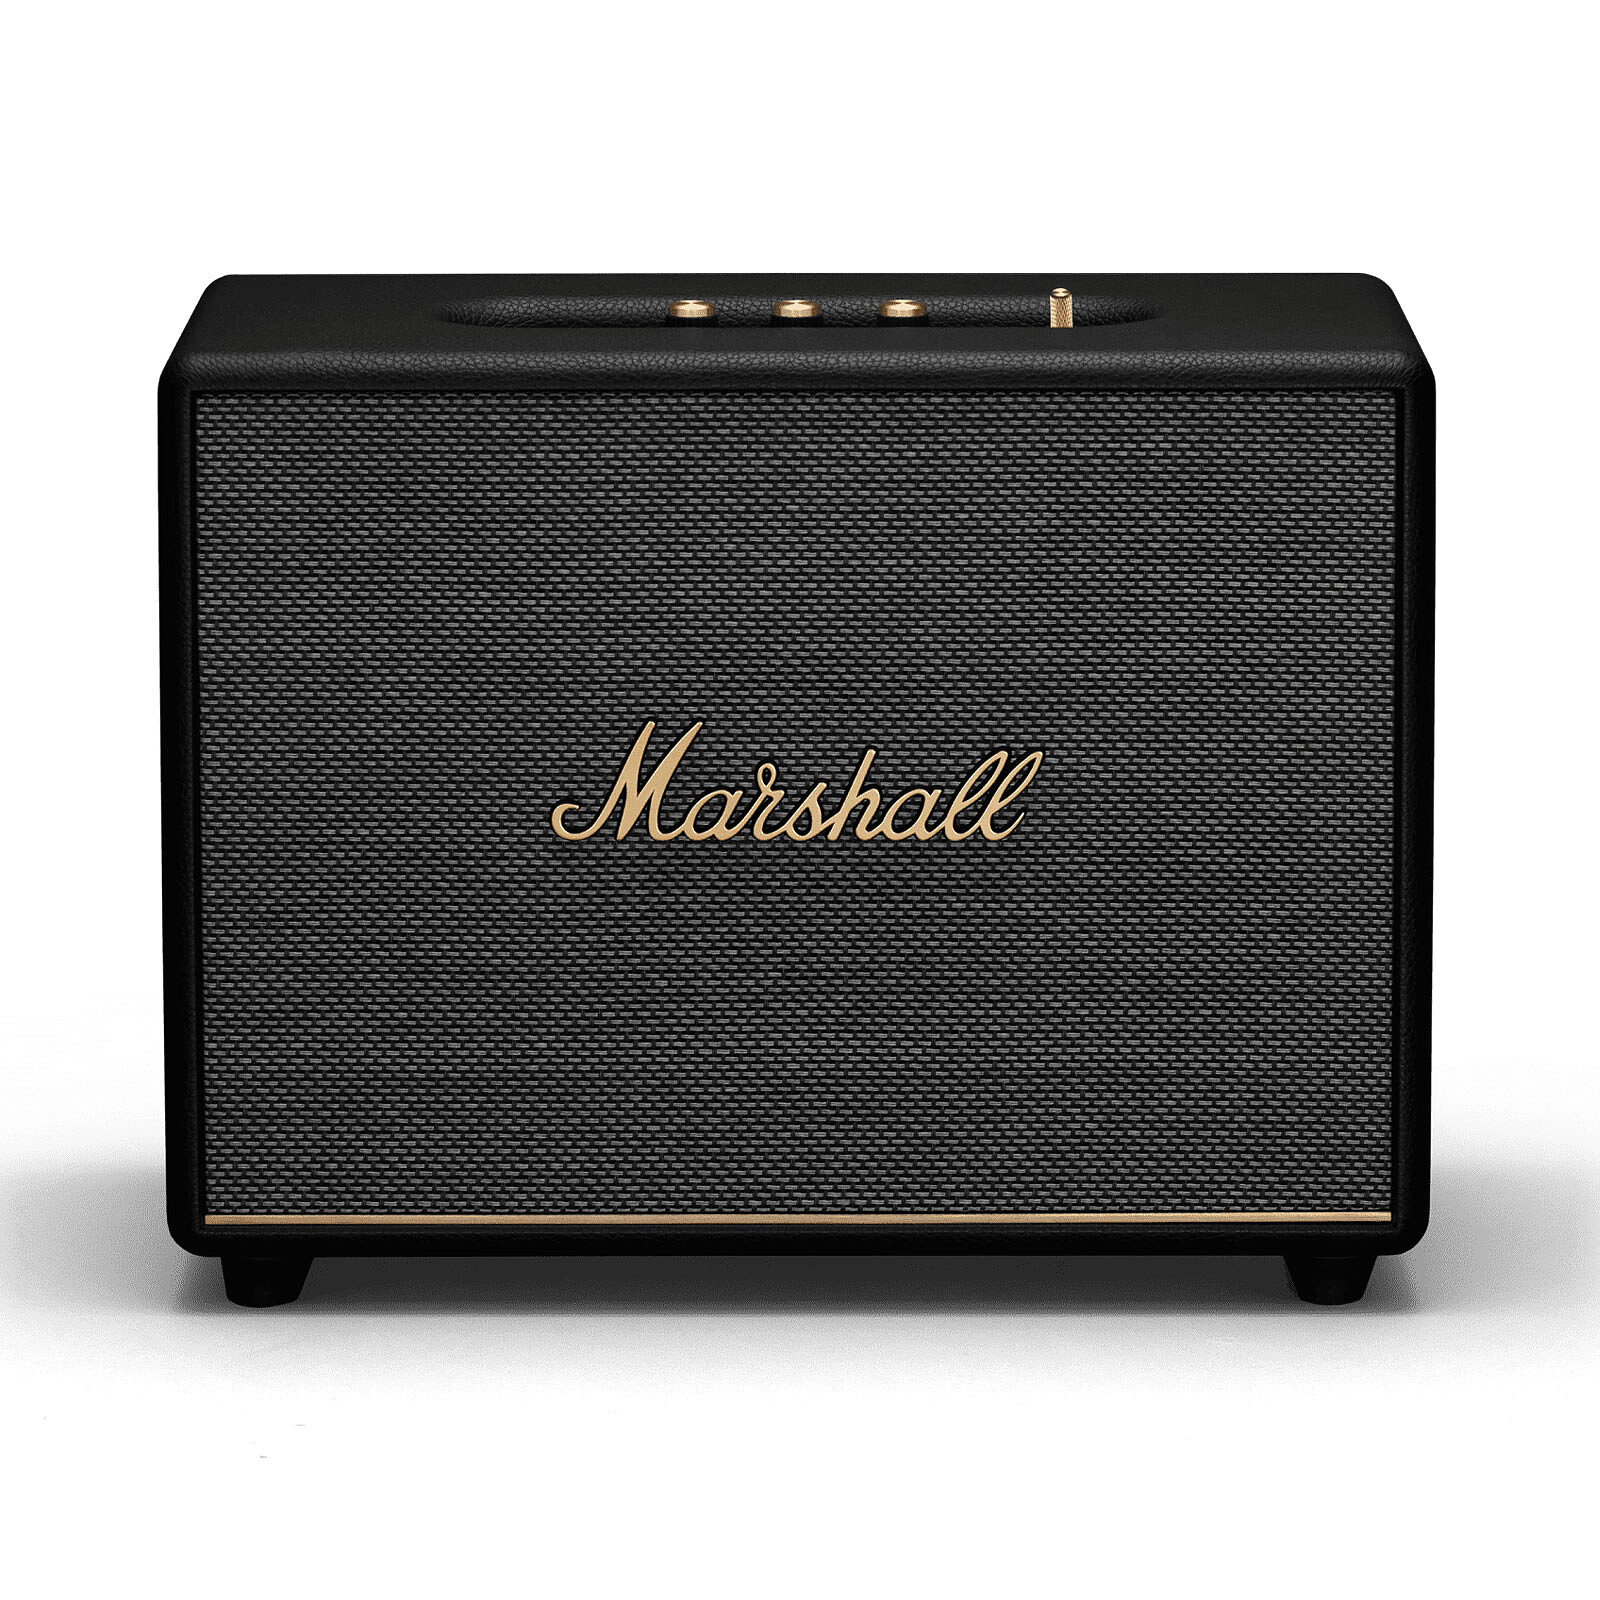 Marshall Woburn II Wireless Bluetooth Speaker - Black